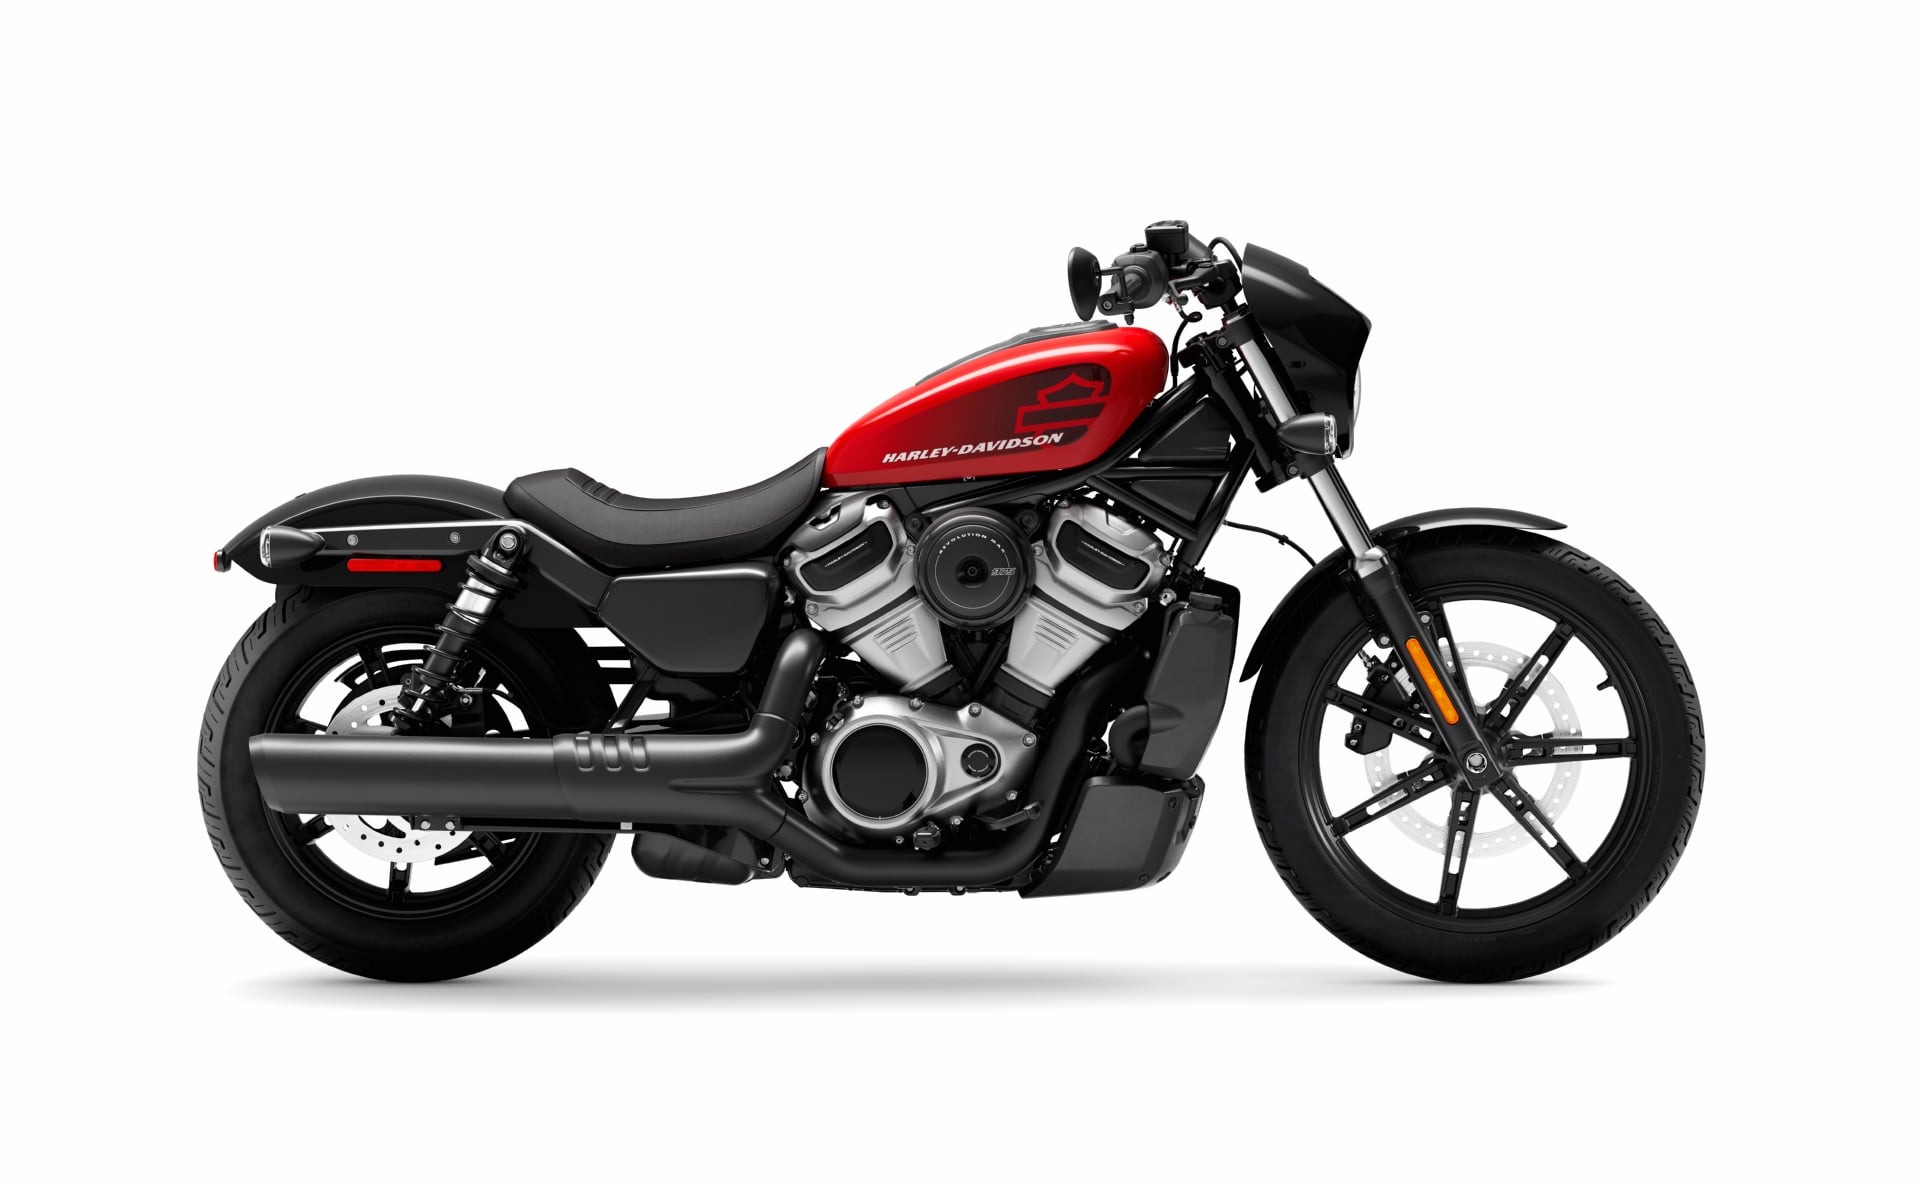 Harley-Davidson Nightster (RH975) wallpapers HD quality